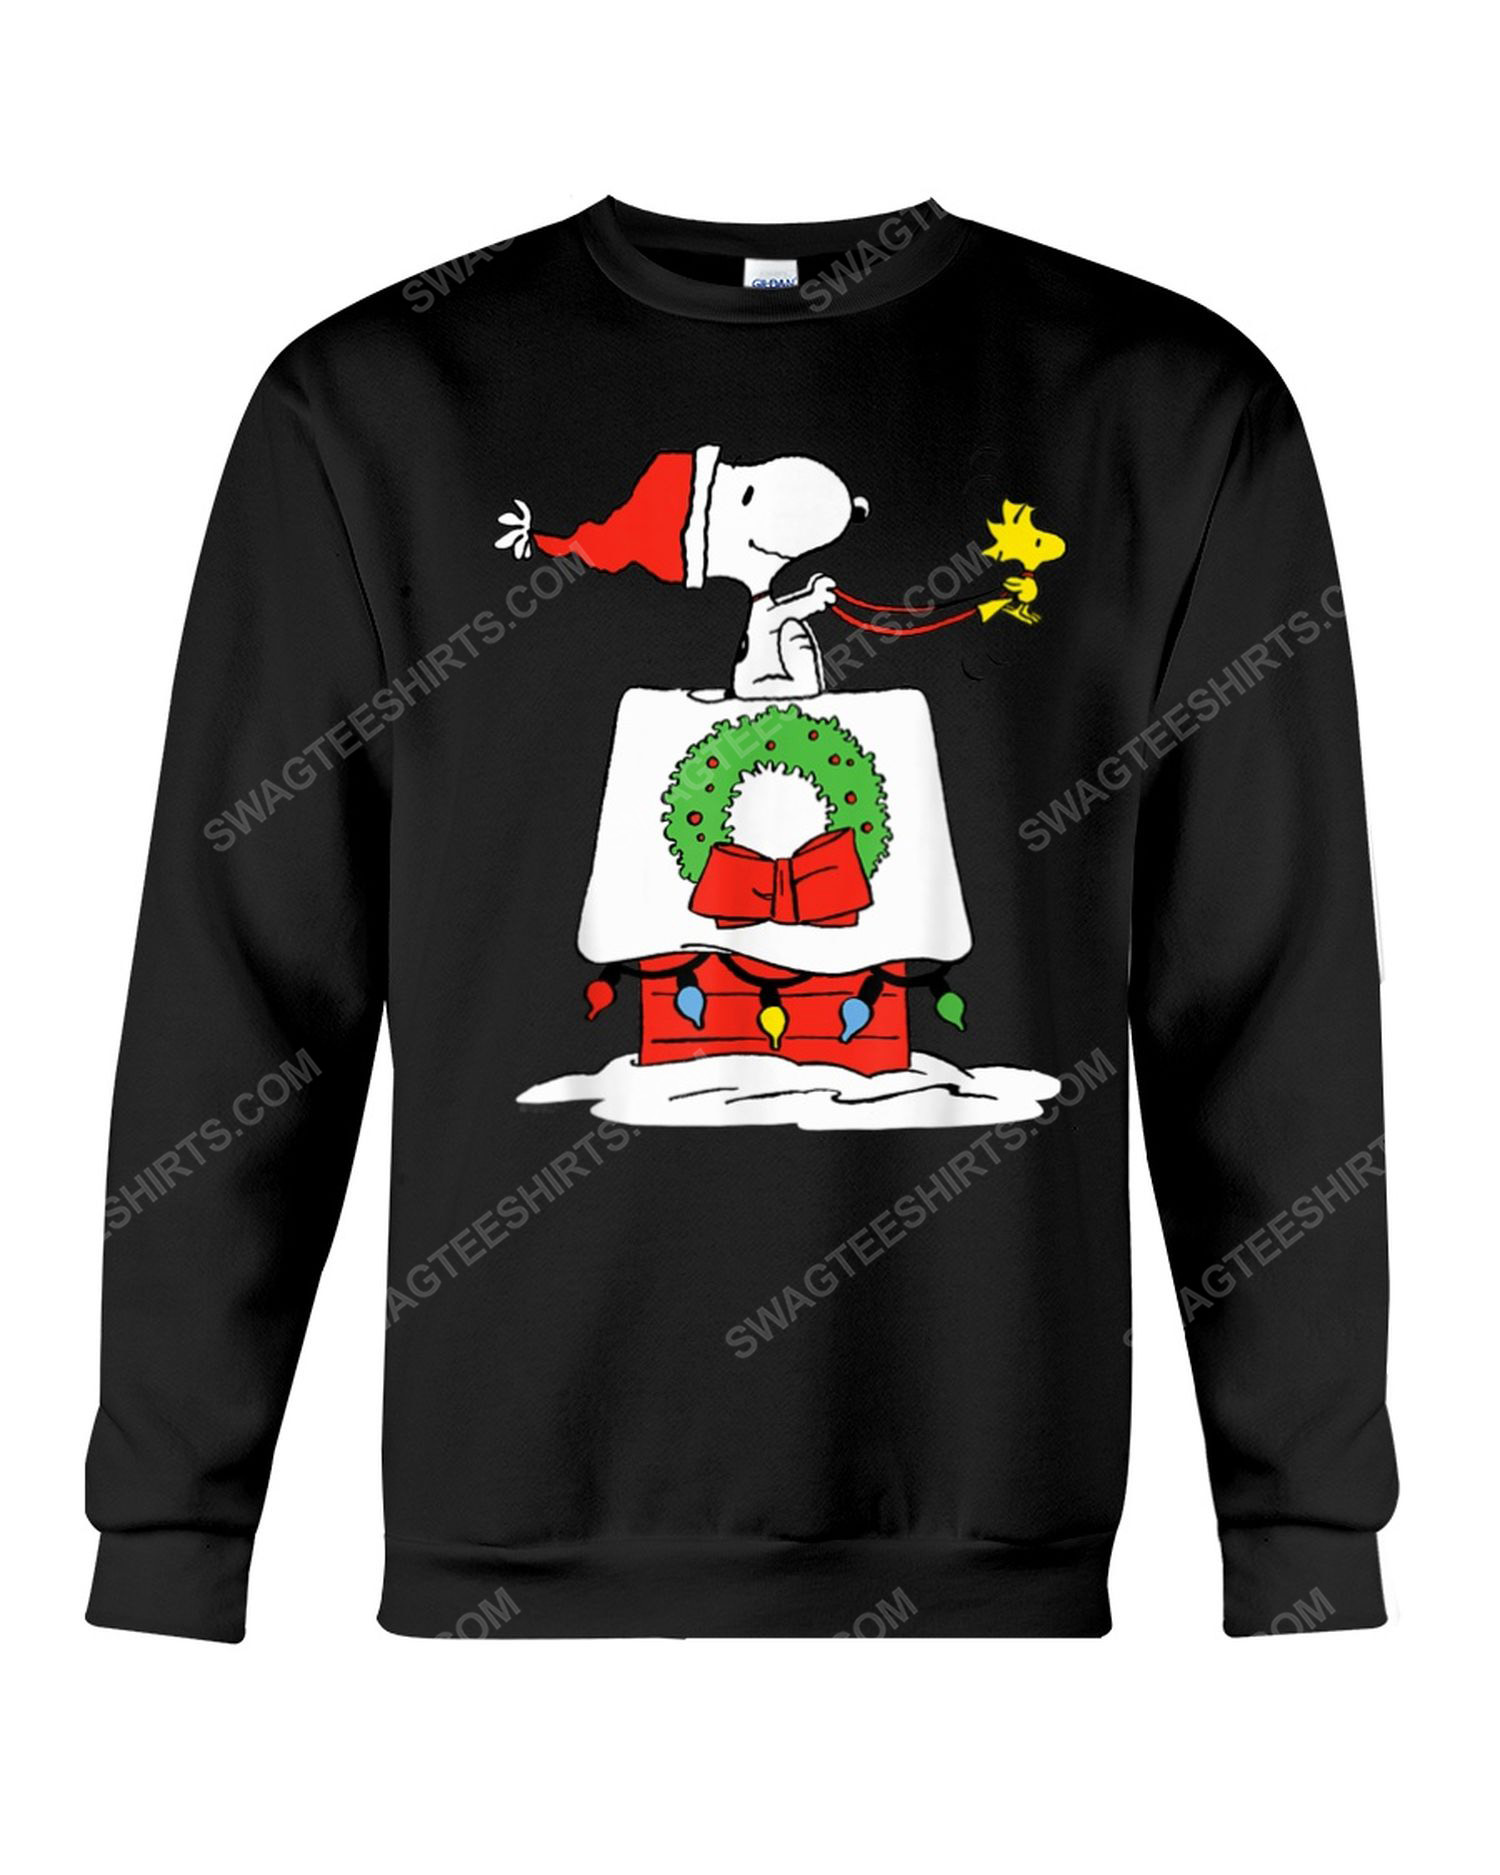 Snoopy and woodstock with christmas house sweatshirt